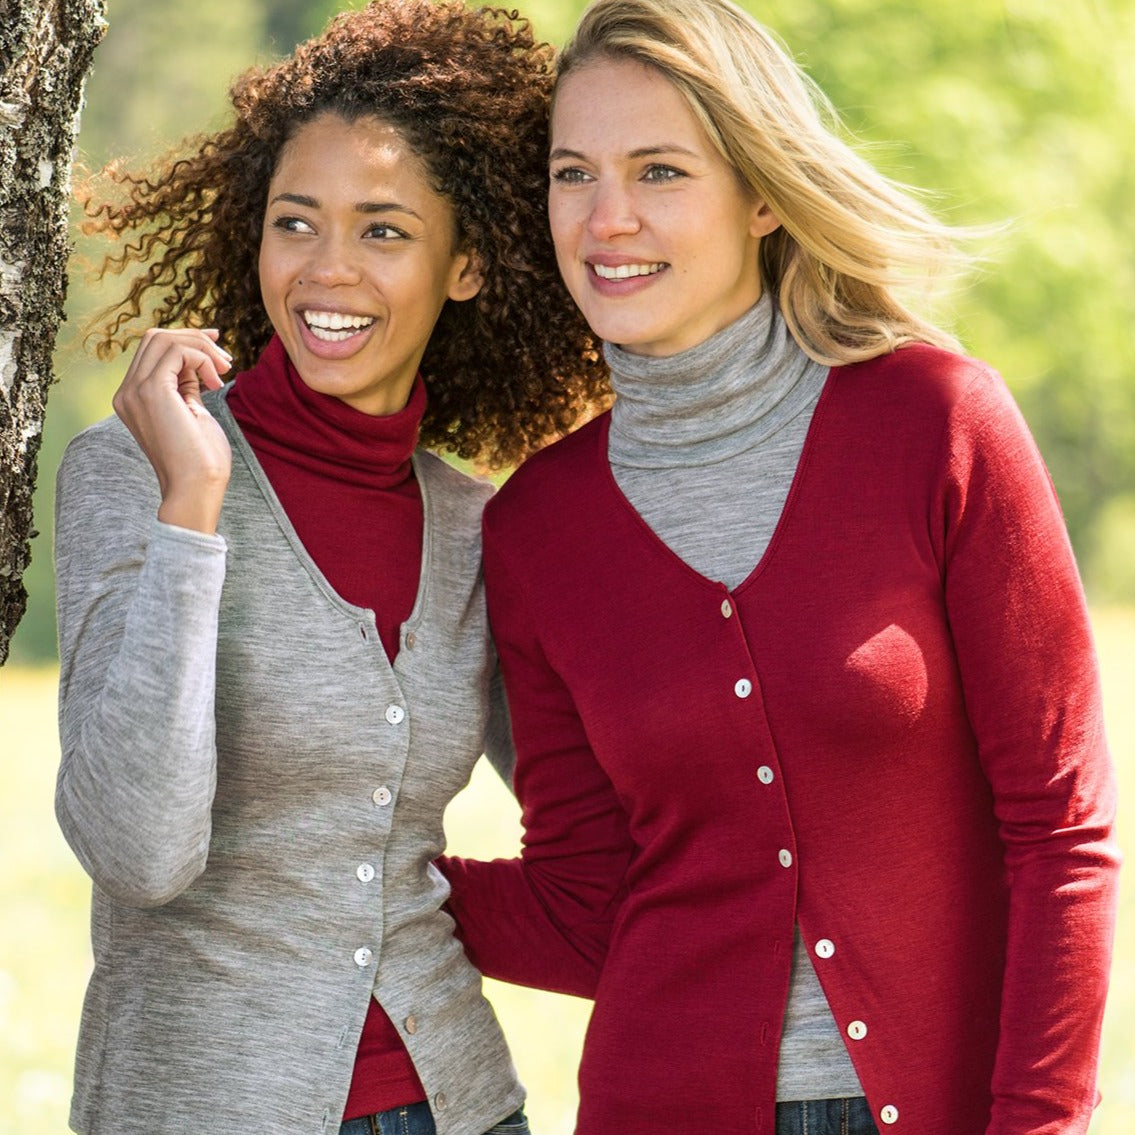 Womens High Neck Base Layer Sheer Wool Silk Blend Pullover Sweater